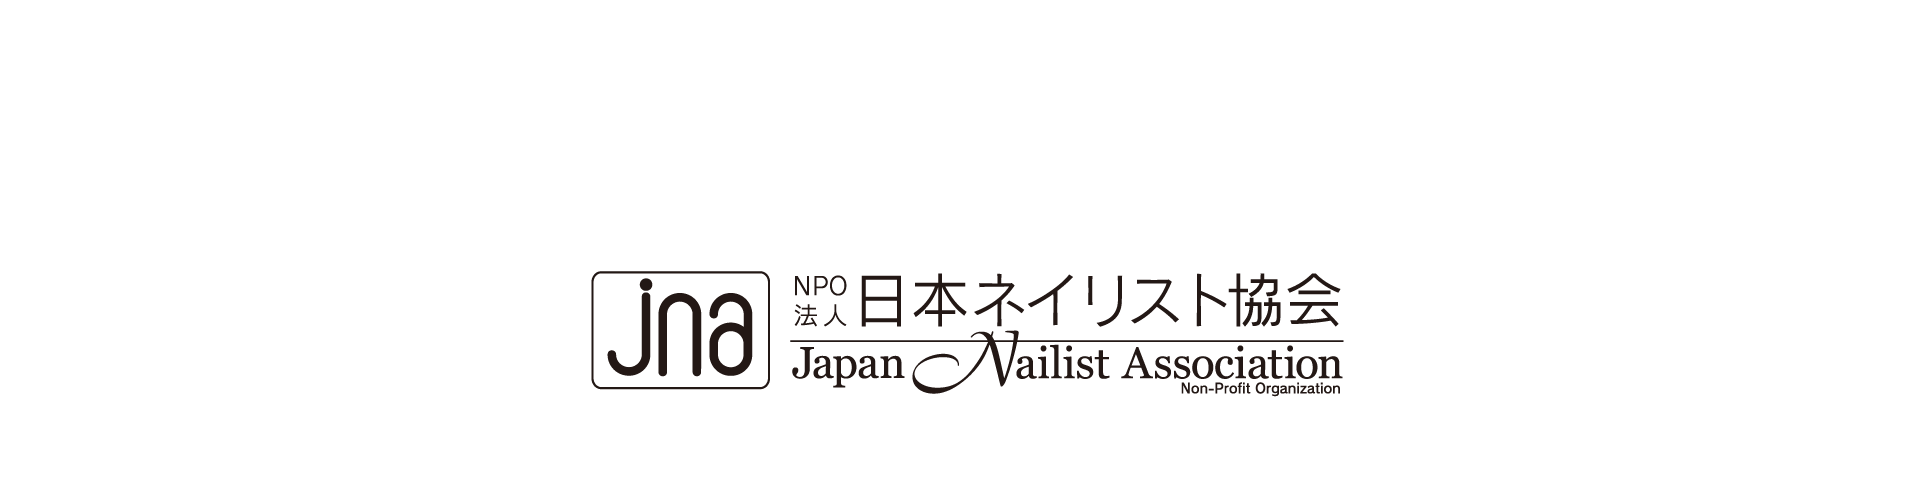 NPO法人日本ネイリスト協会（JNA）では、お客様の安全・安心の為に「新型コロナウイルス感染症対策ガイドライン」を策定しています。
